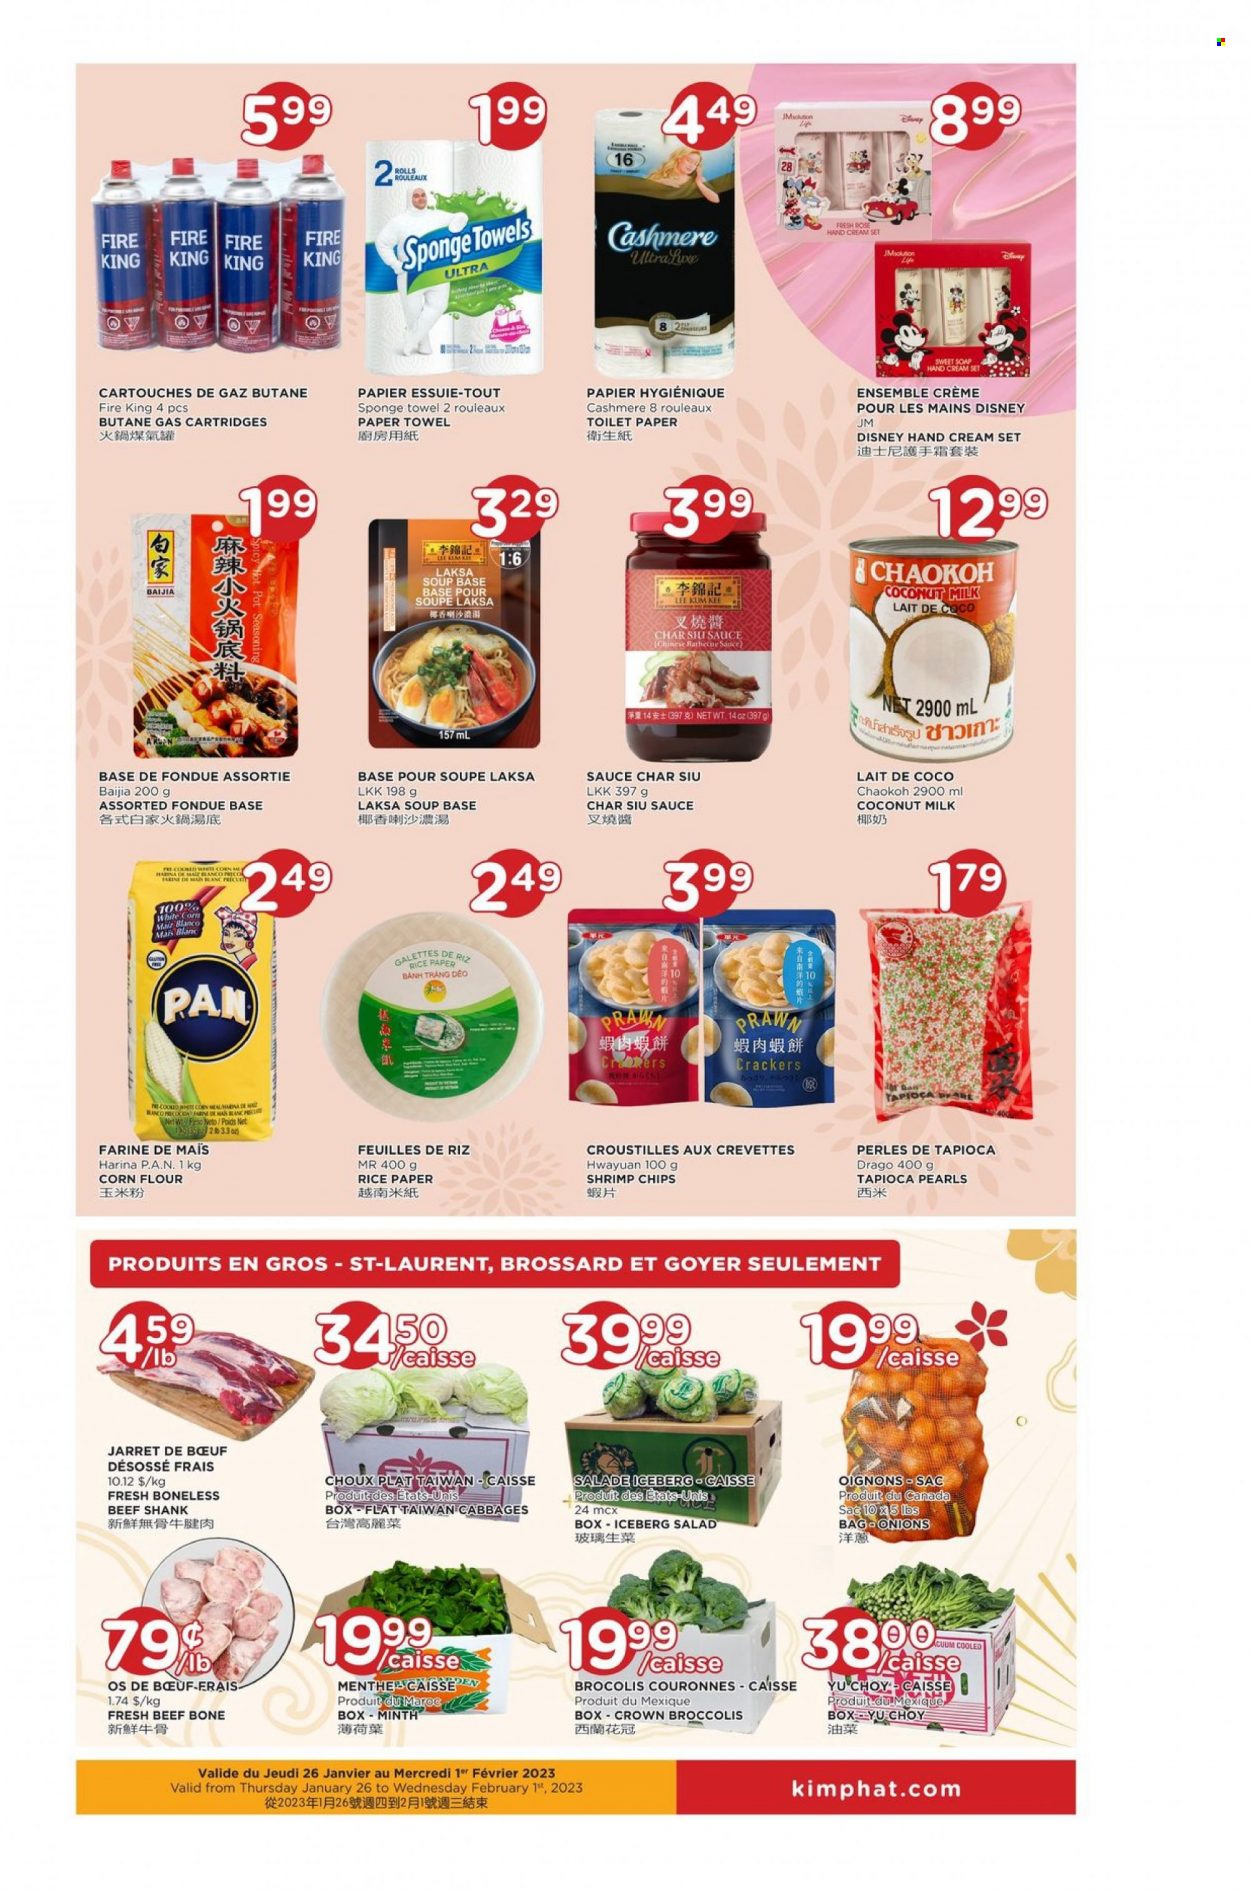 thumbnail - Kim Phat Flyer - January 26, 2023 - February 01, 2023 - Sales products - corn, salad, prawns, shrimps, soup, sauce, Disney, crackers, chips, flour, corn flour, coconut milk, beef meat, beef shank, pan. Page 2.